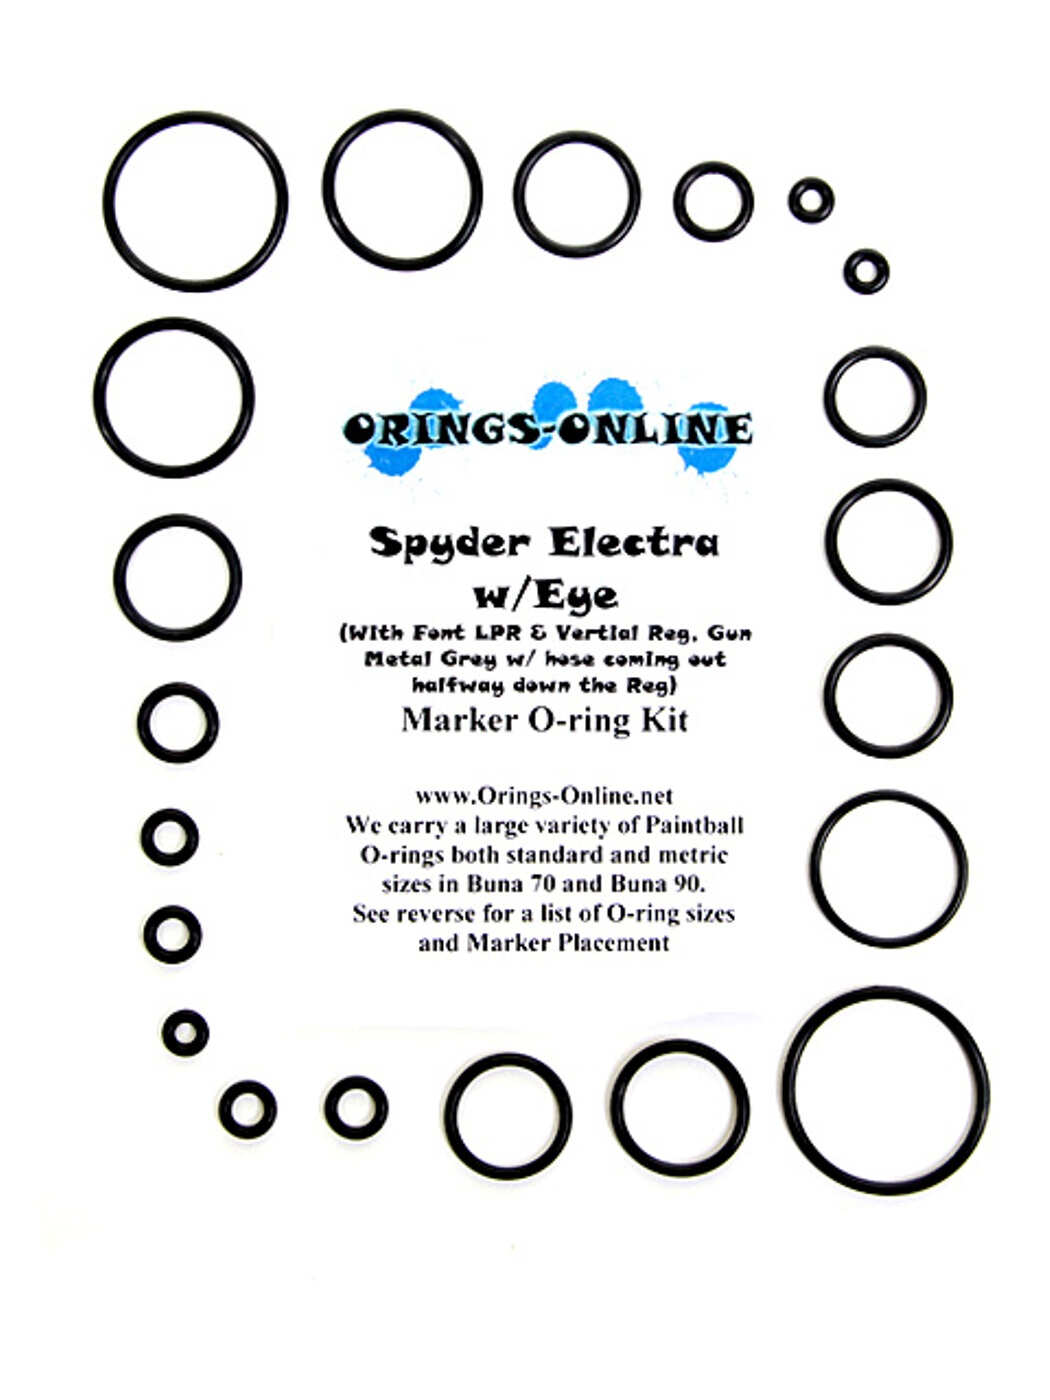 Spyder Sonix Paintball Marker O-ring Oring Kit x 2 rebuilds kits 